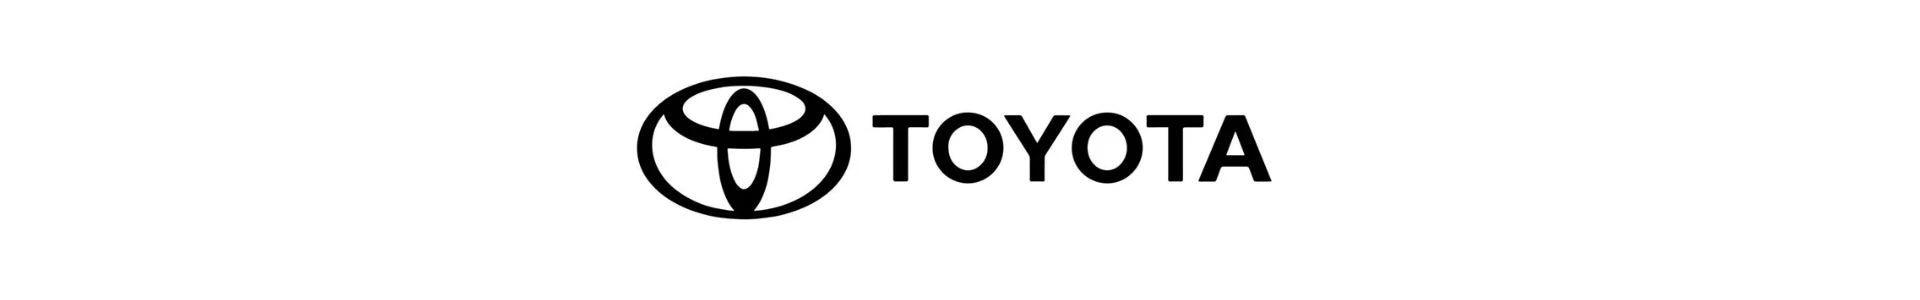 Toyota - Radius Fabrications